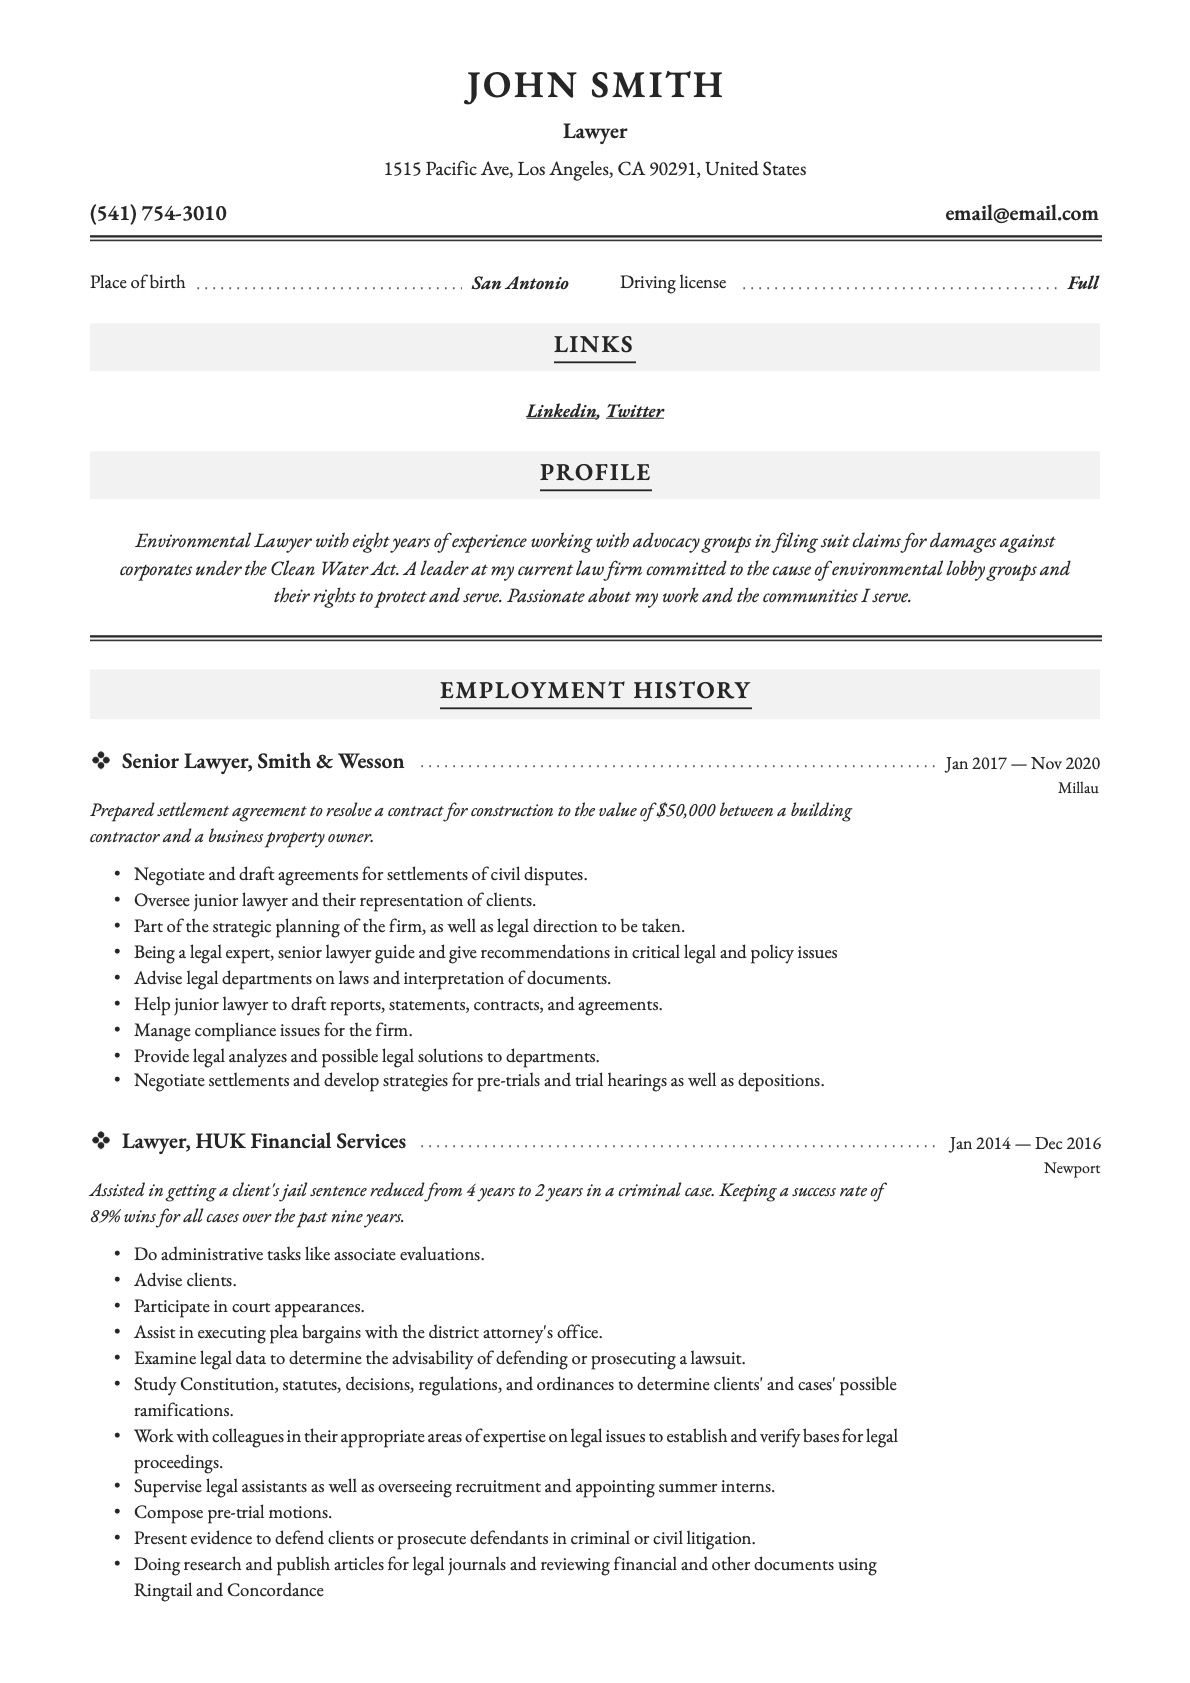 Example resume Lawyer-10